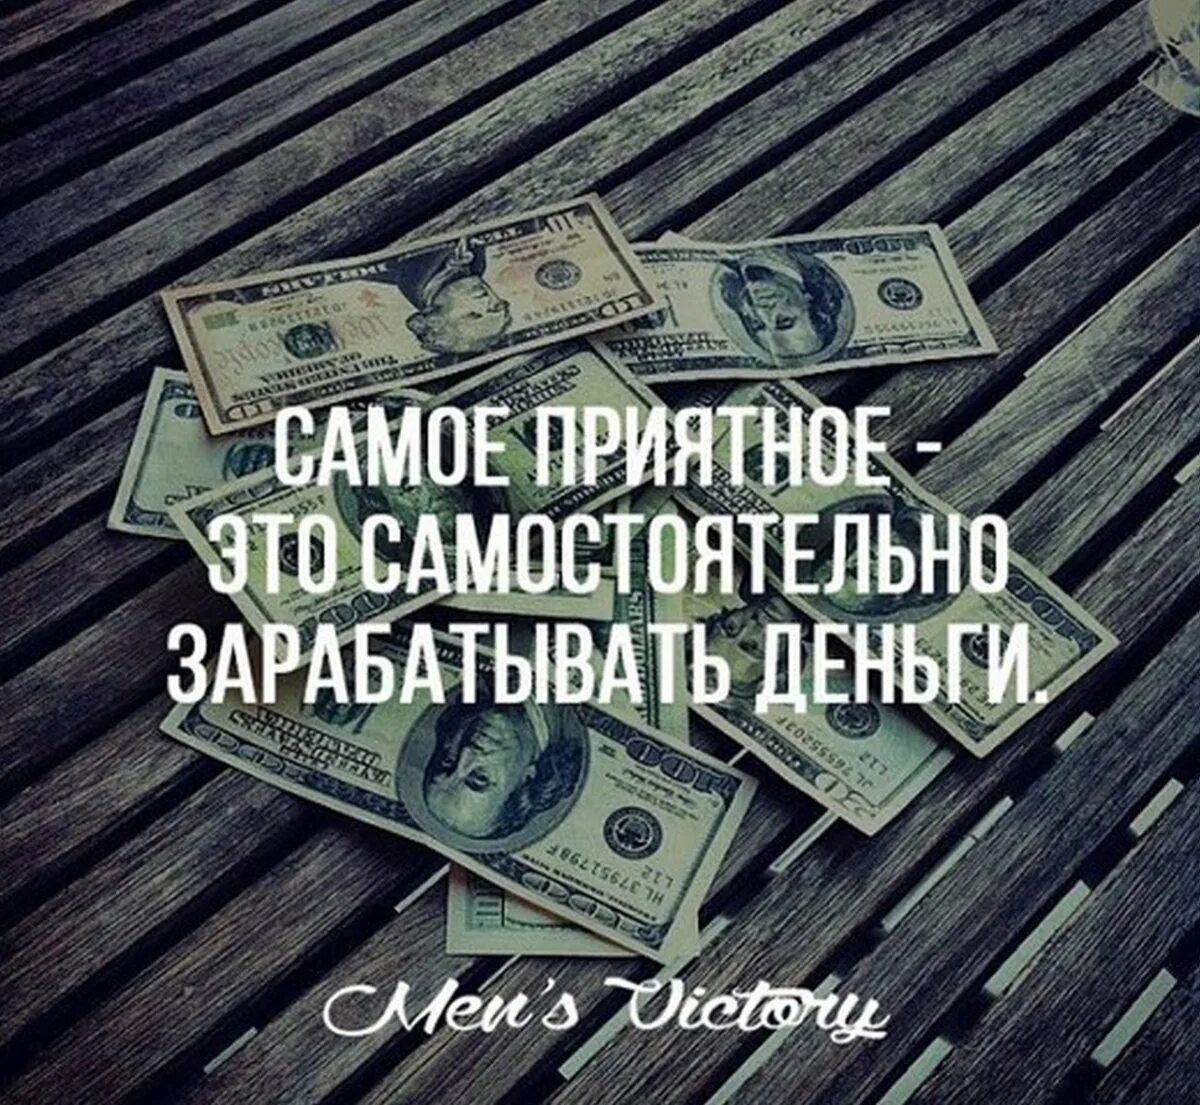 Богатство это коротко. Мотивация деньги. Цитаты про деньги и богатство. Цитаты про деньги. Афоризмы о деньгах и богатстве.